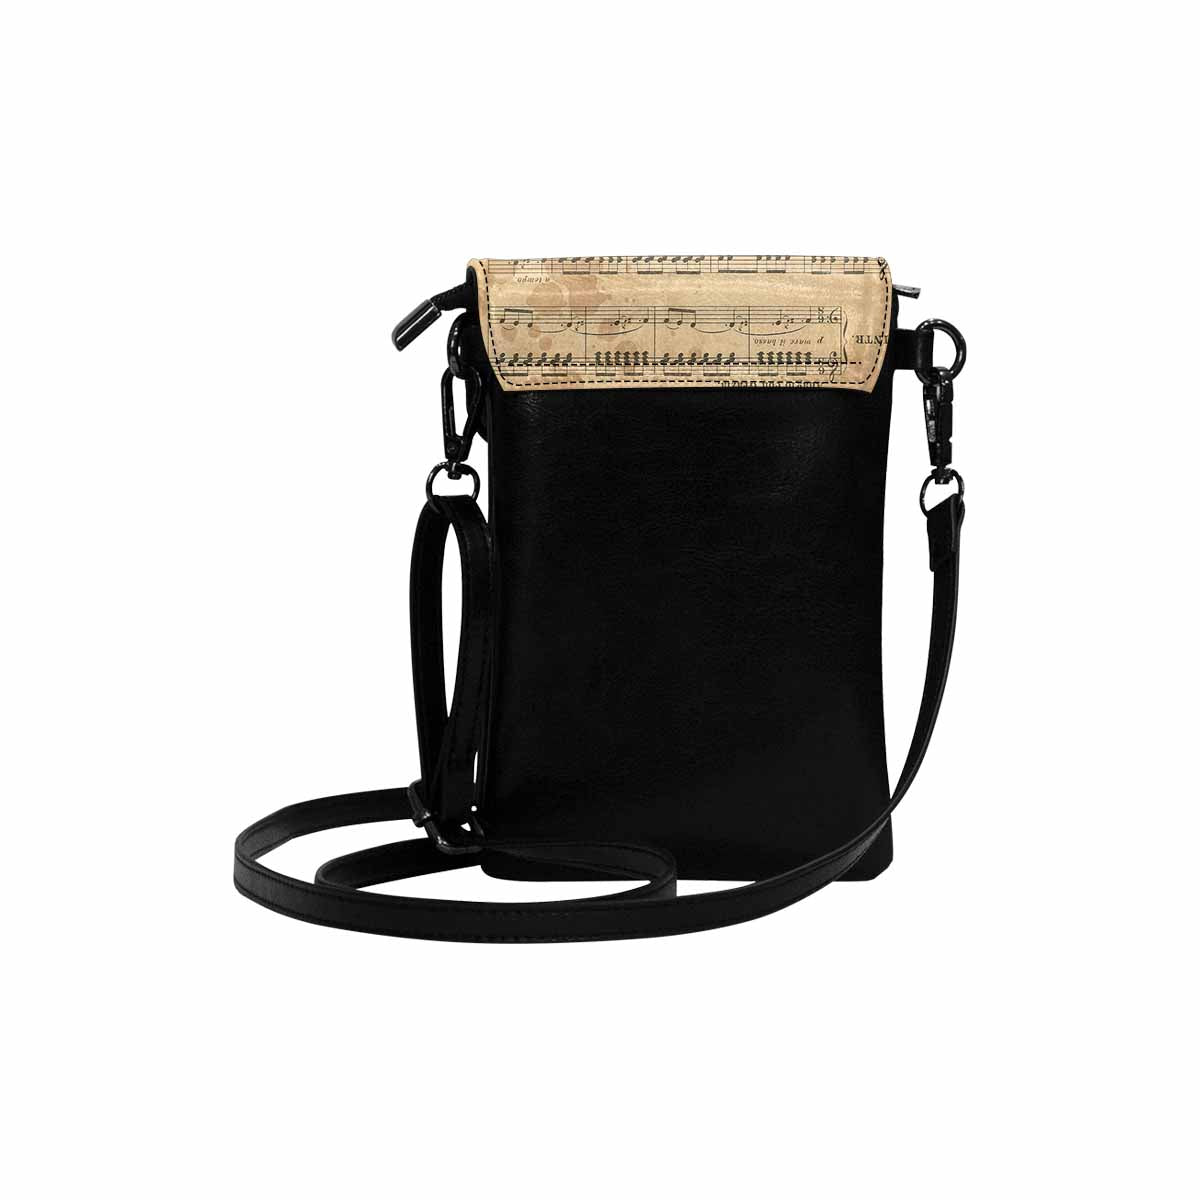 General Victorian cell phone purse, mobile purse, Design 55